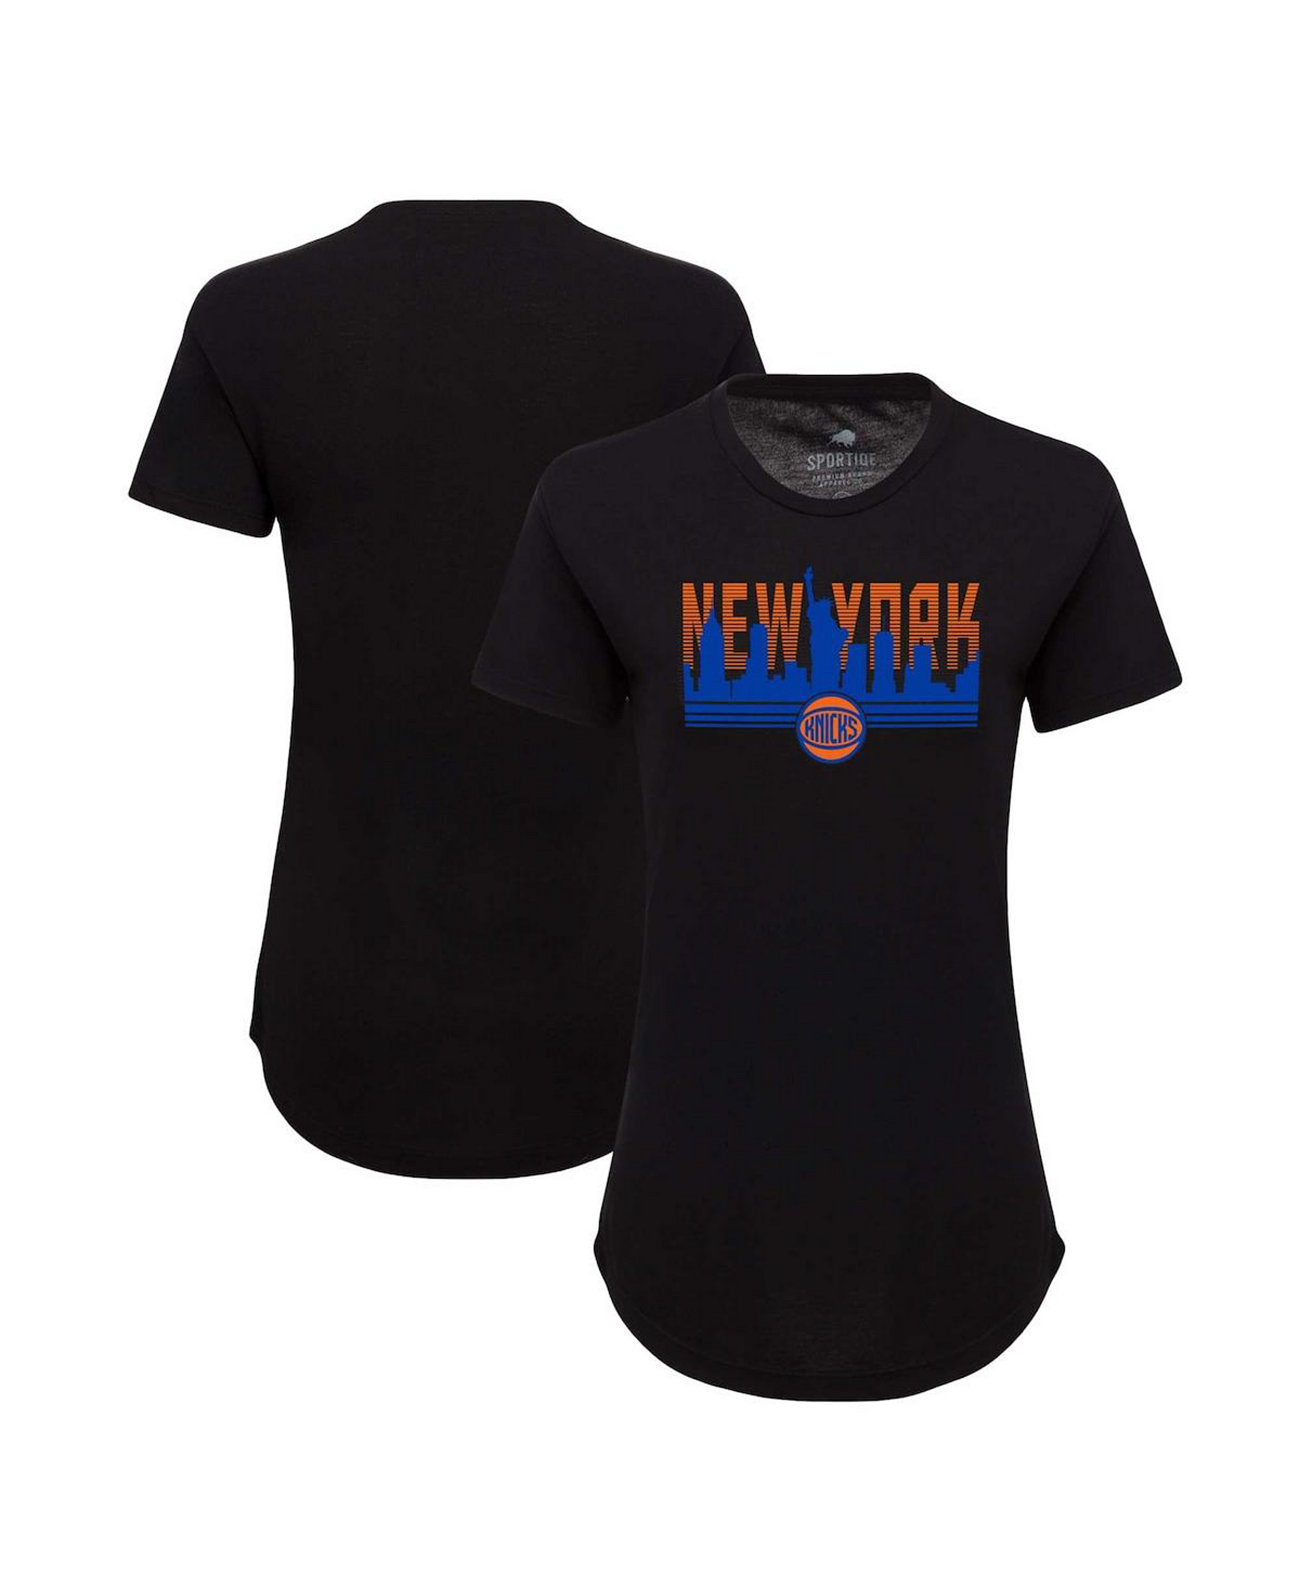 Women's New York Knicks Phoebe Super Soft Tri-Blend T-Shirt Sportiqe